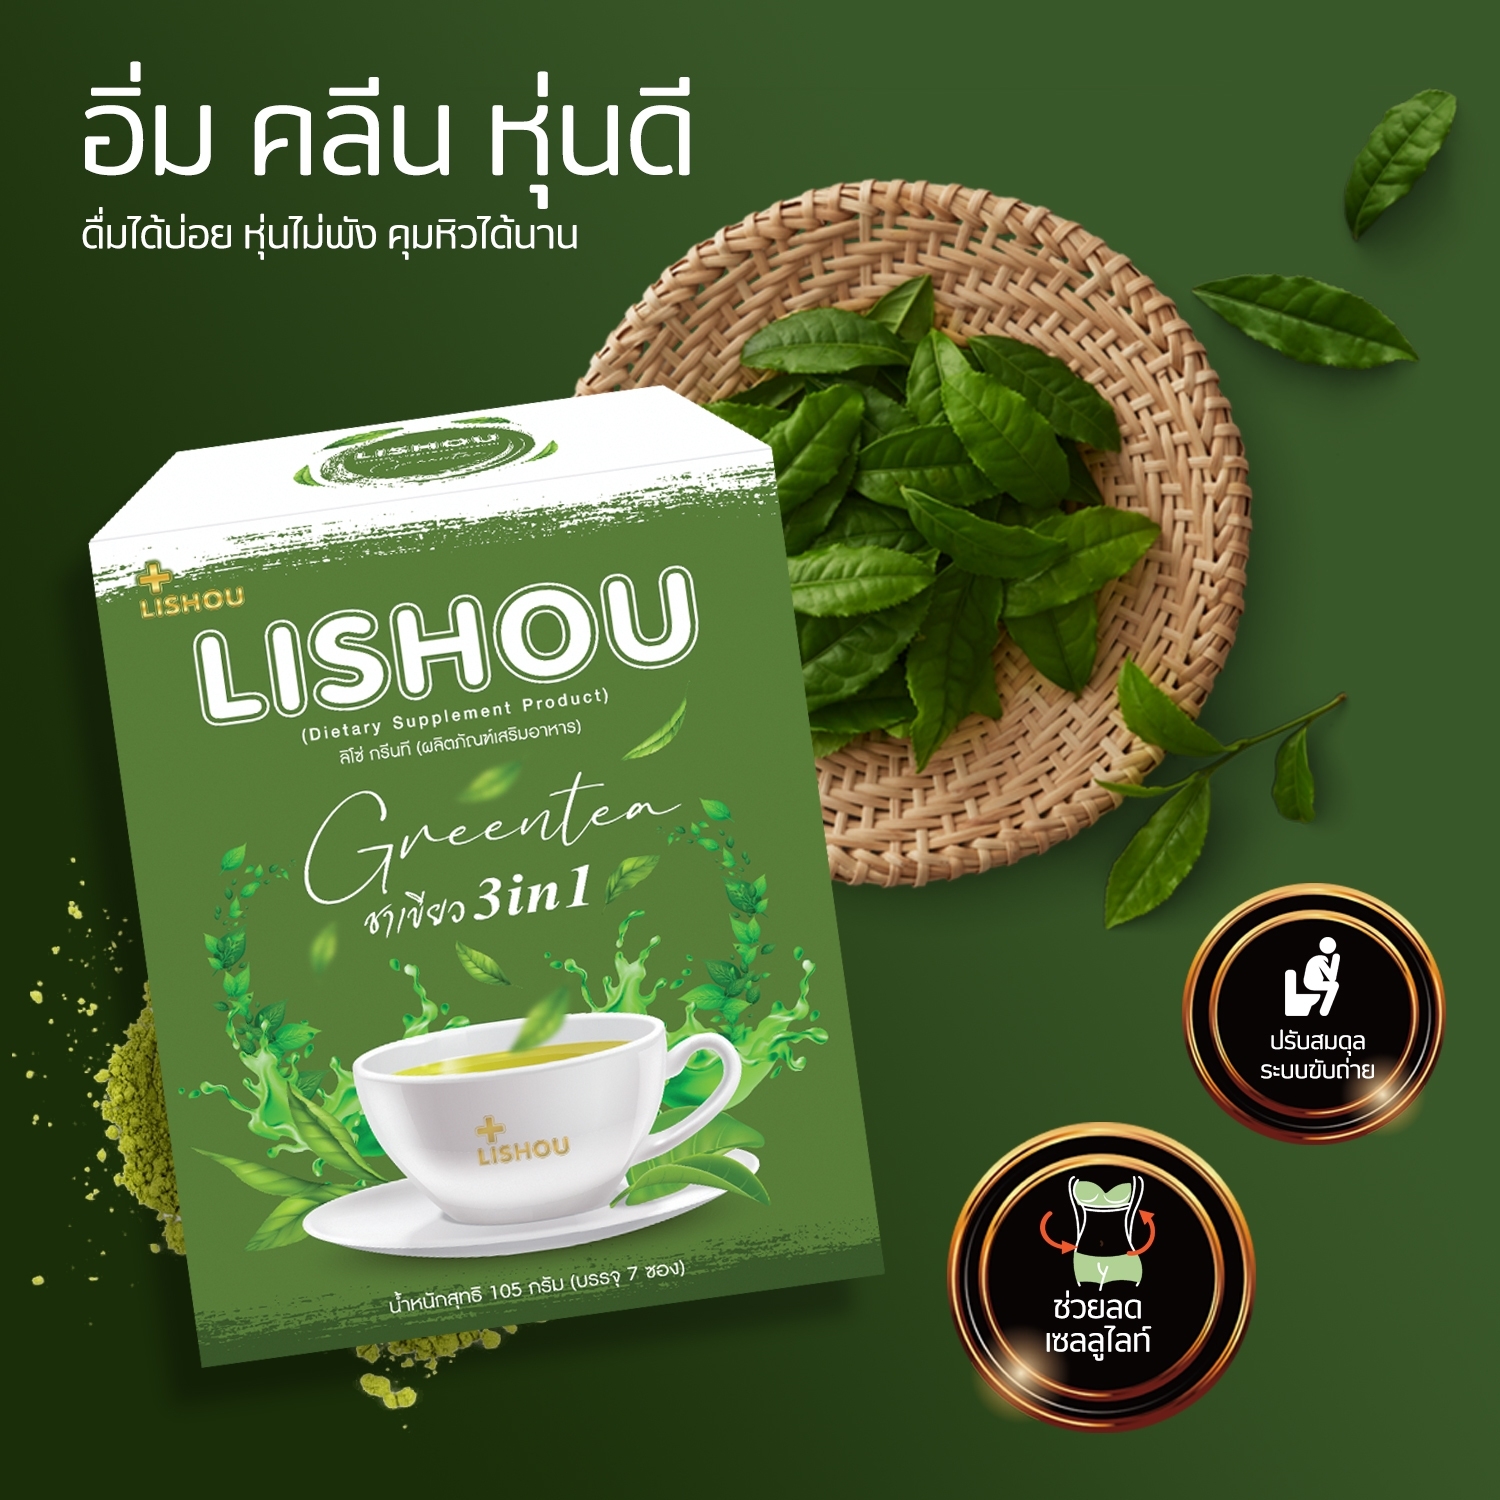 Thai Green Tea (ชาเขียว) - Simply Suwanee